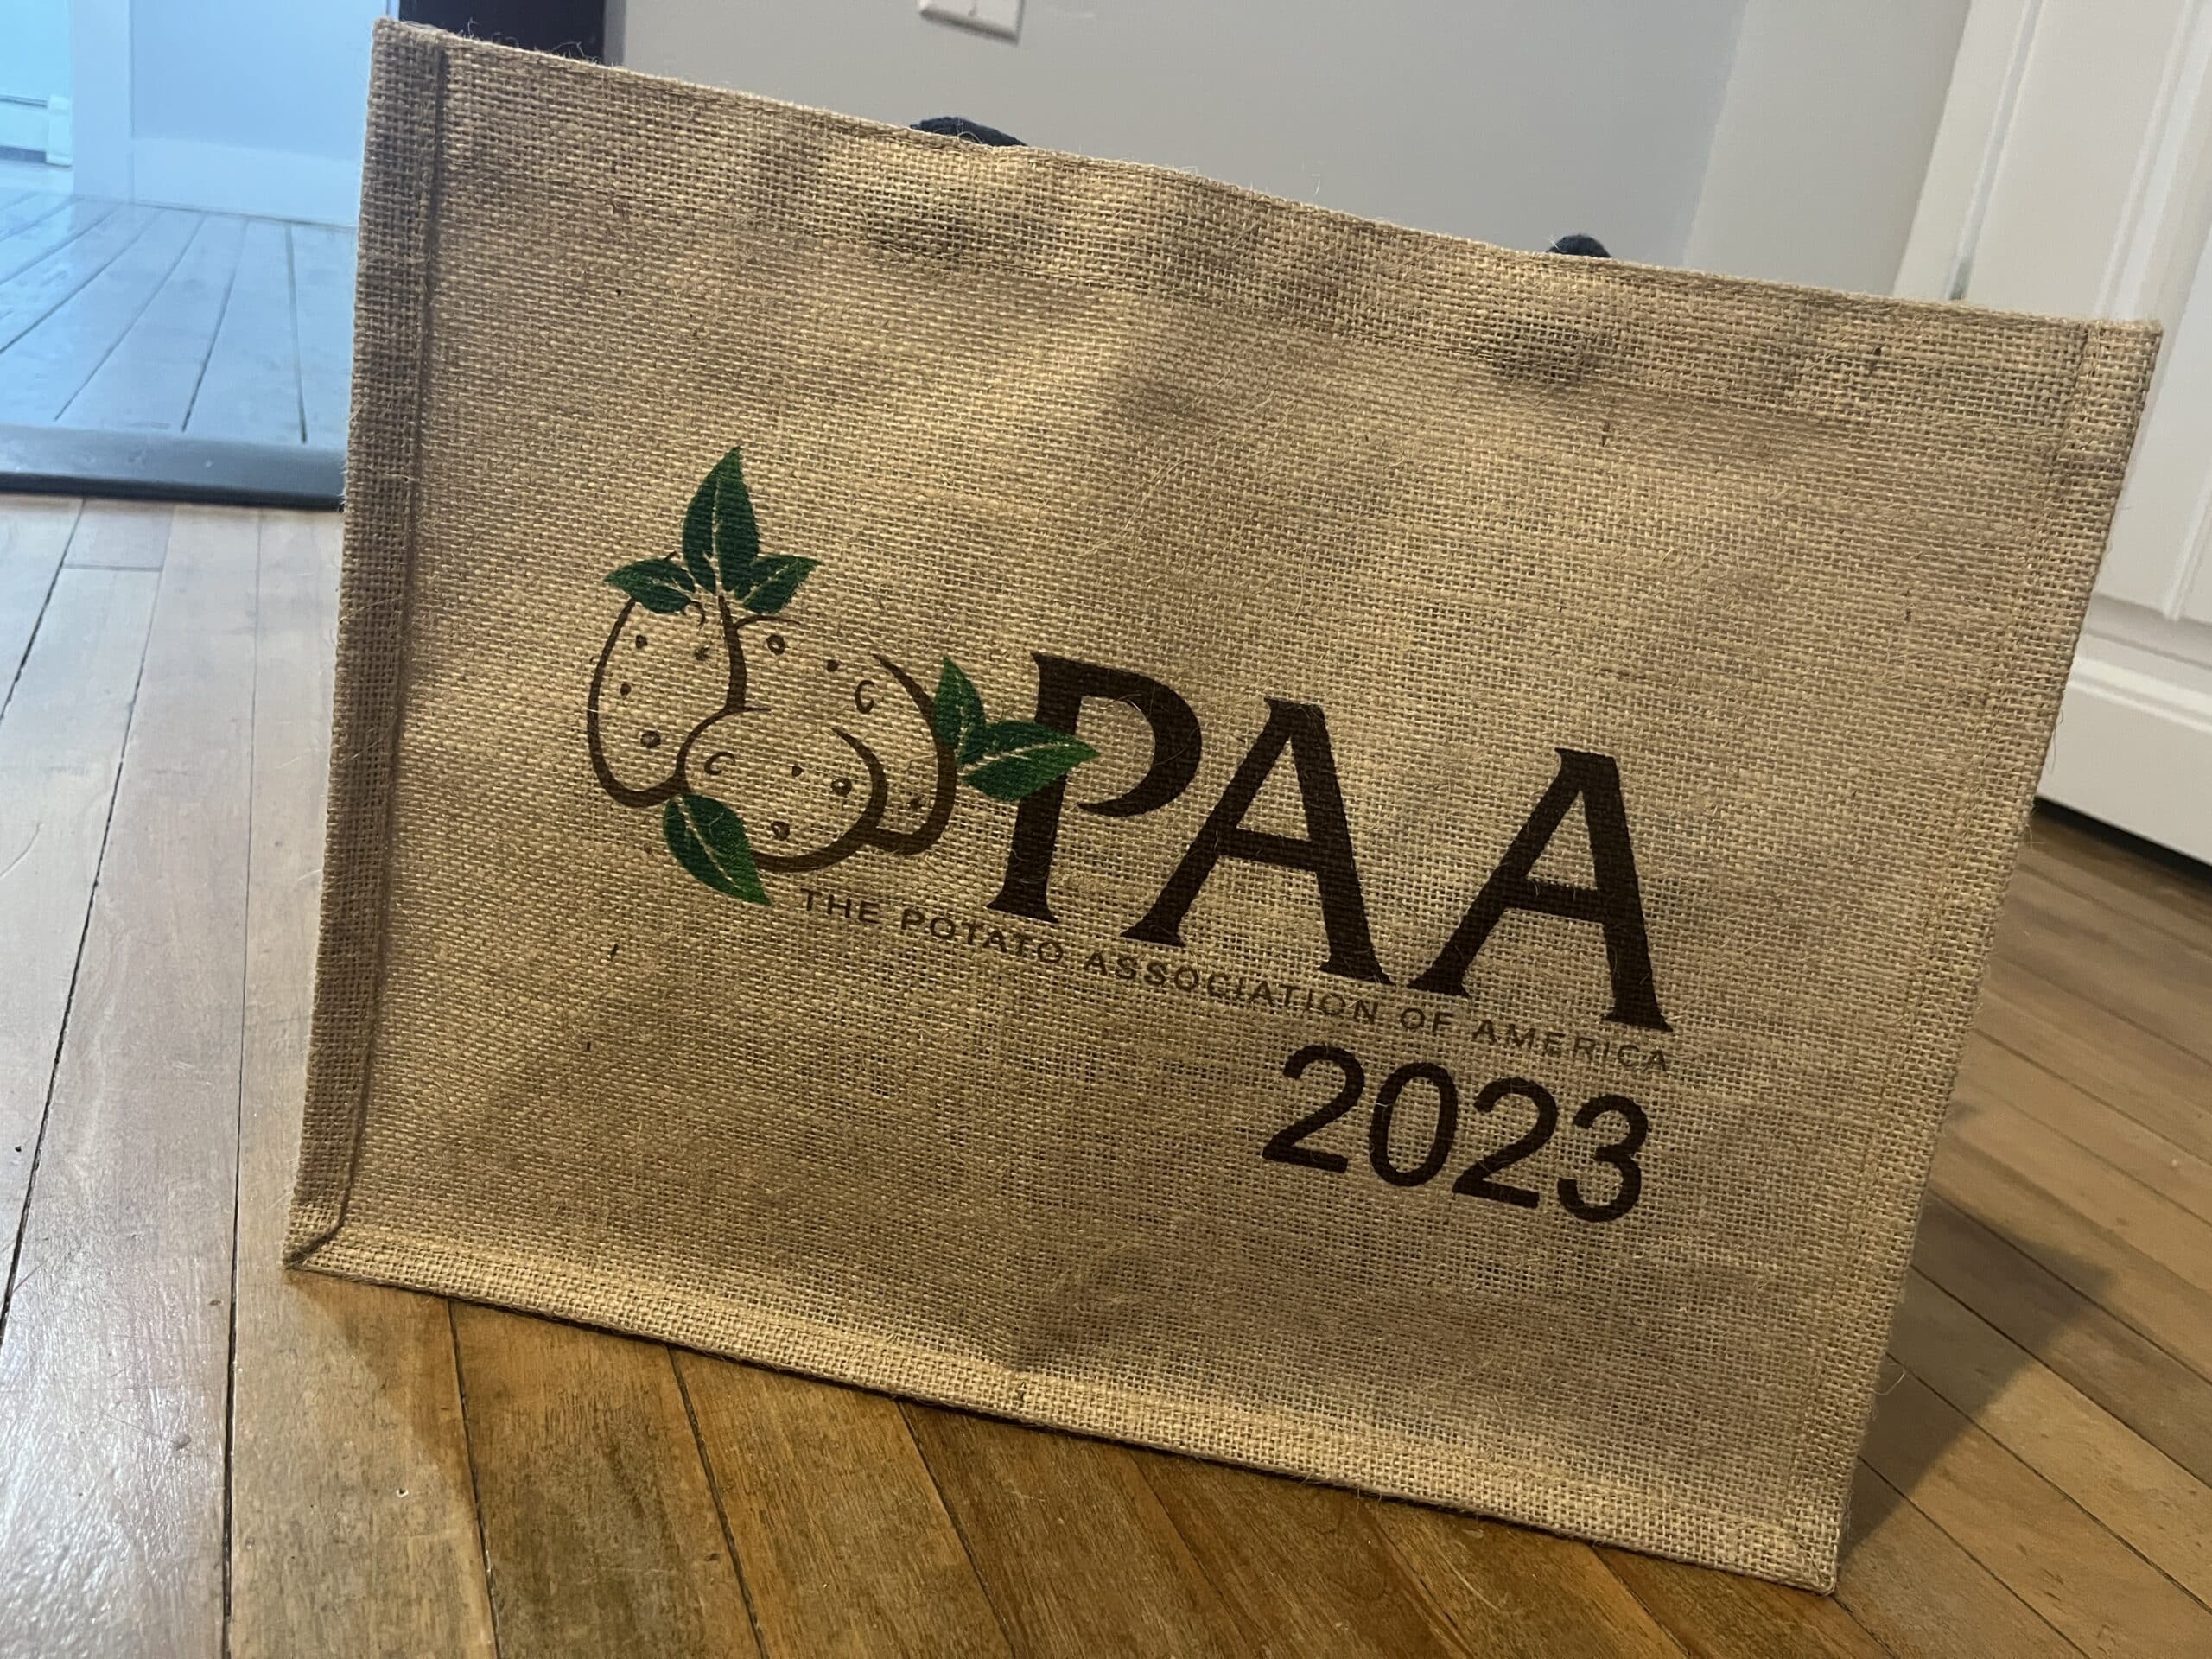 Potato Association of America 2023 logo